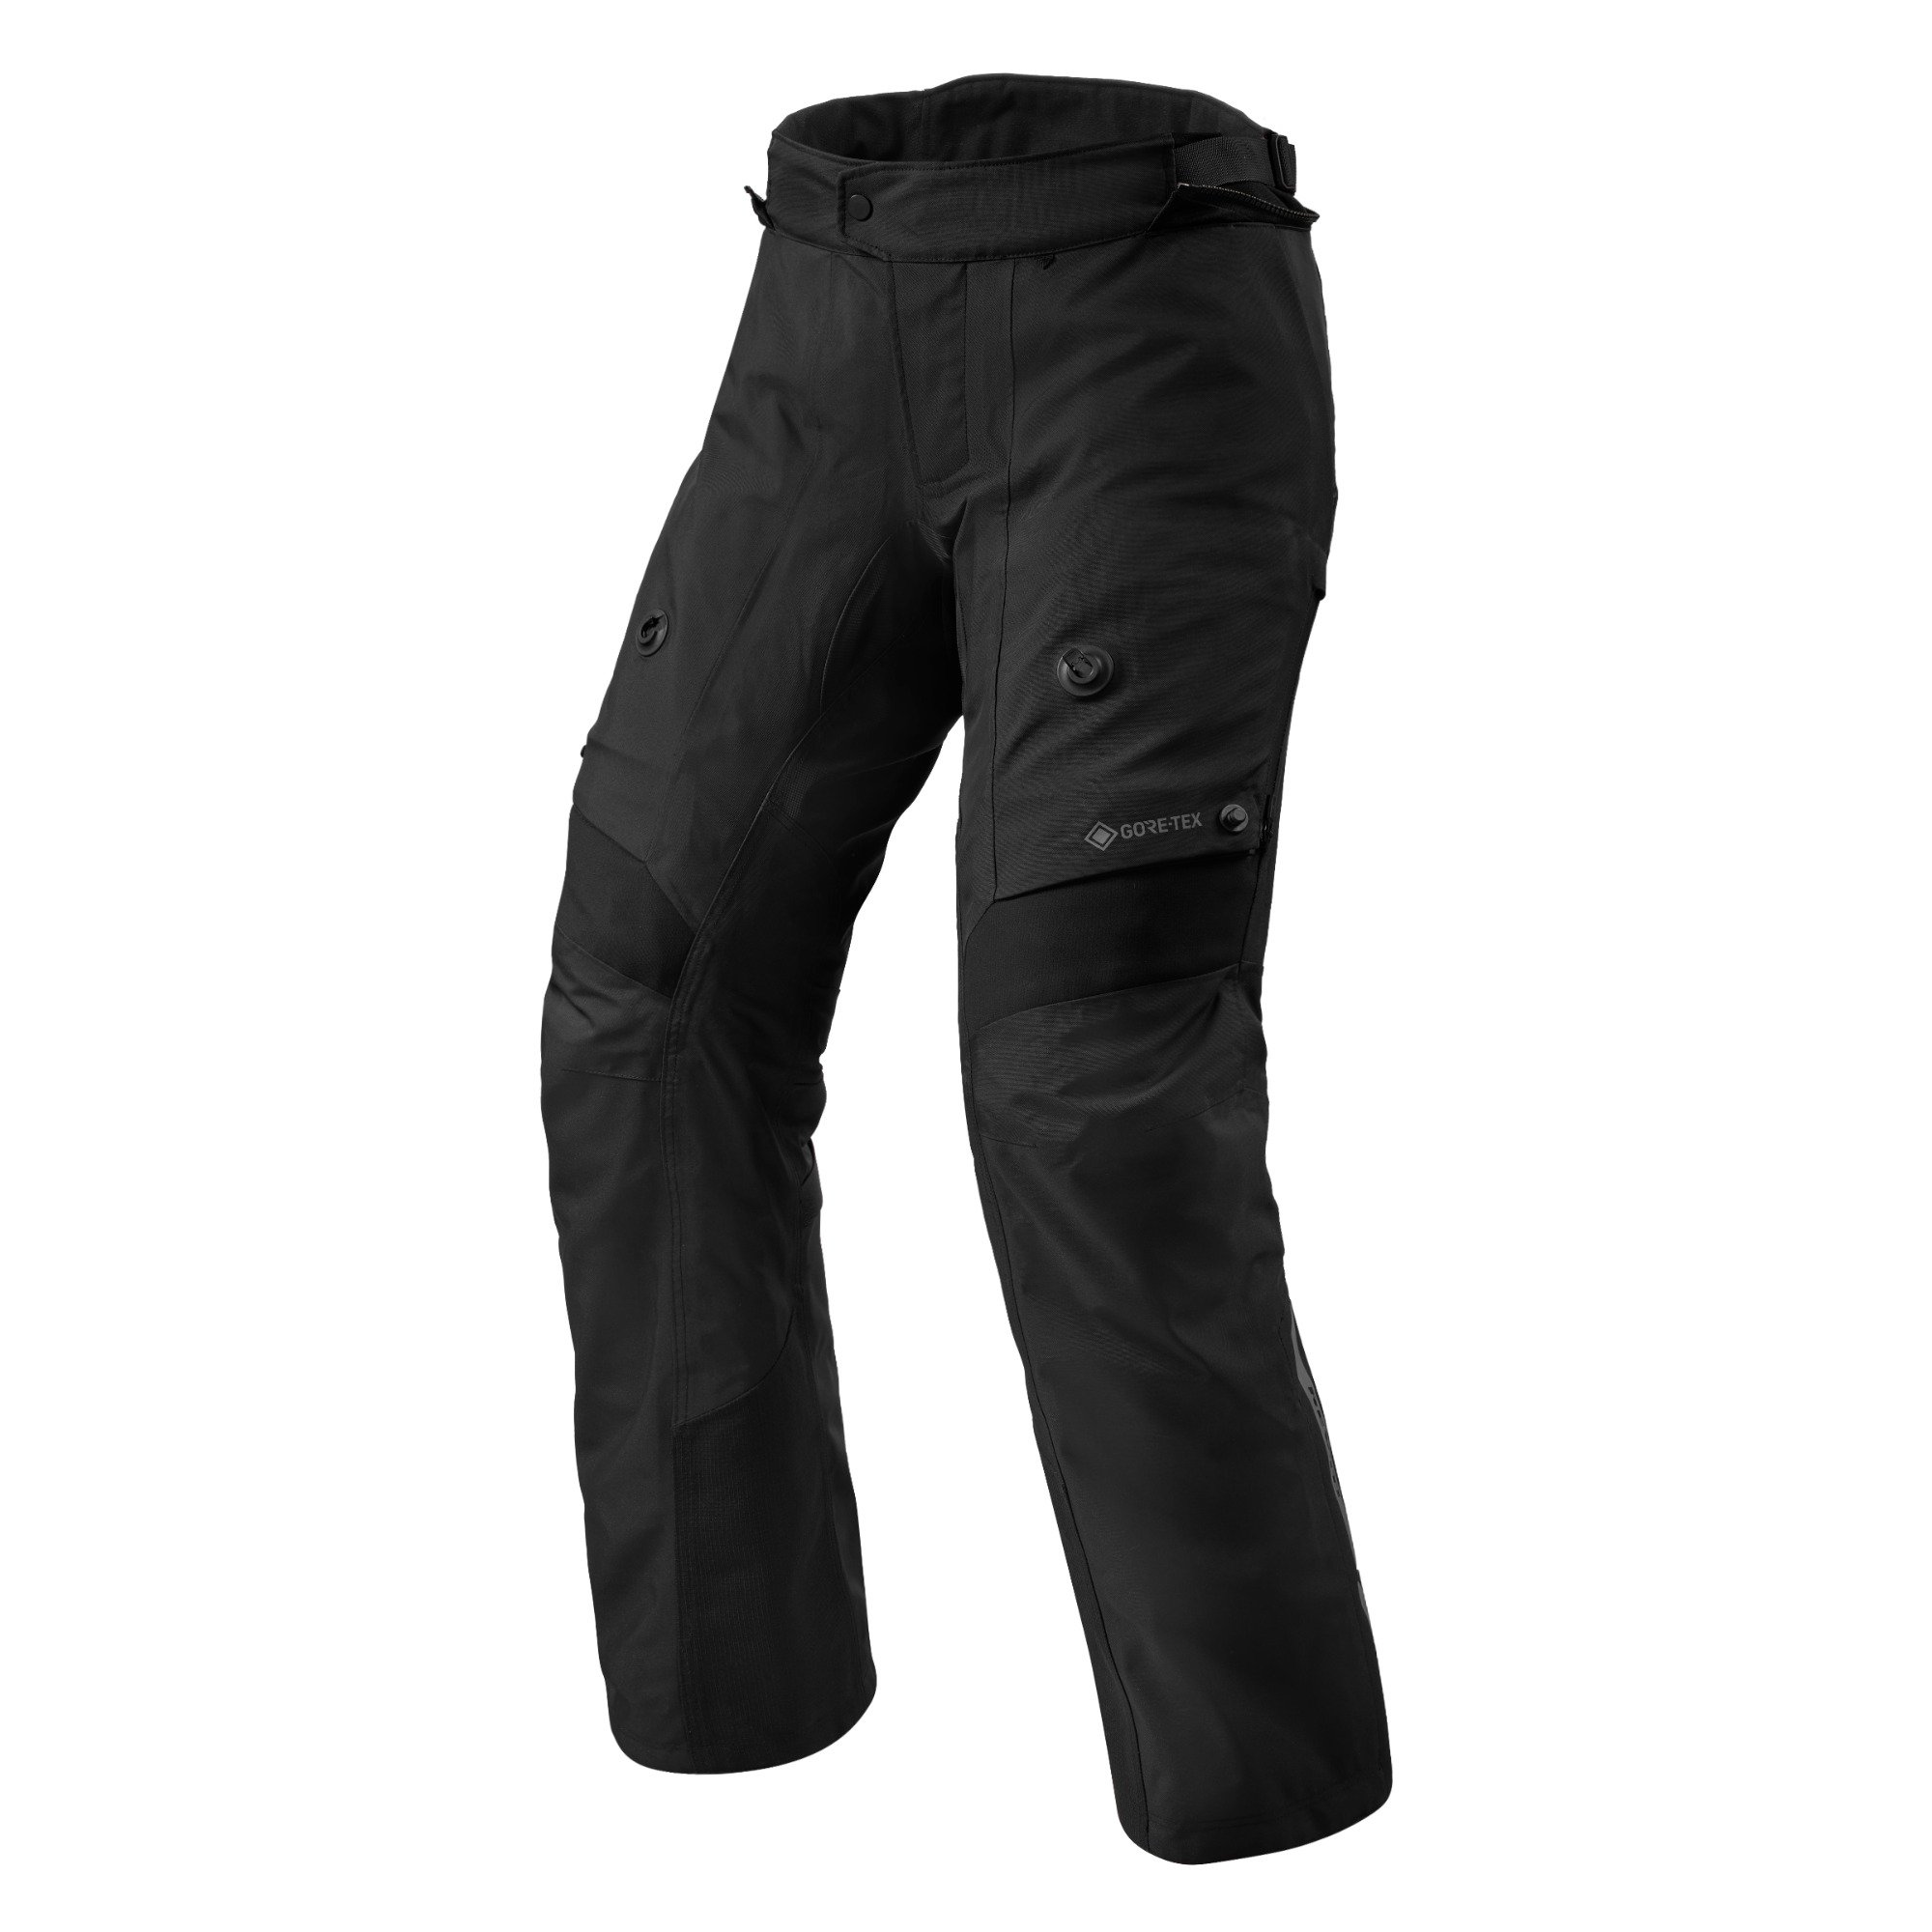 Image of REV'IT! Pants Poseidon 3 GTX Black Standard Motorcycle Pants Talla M